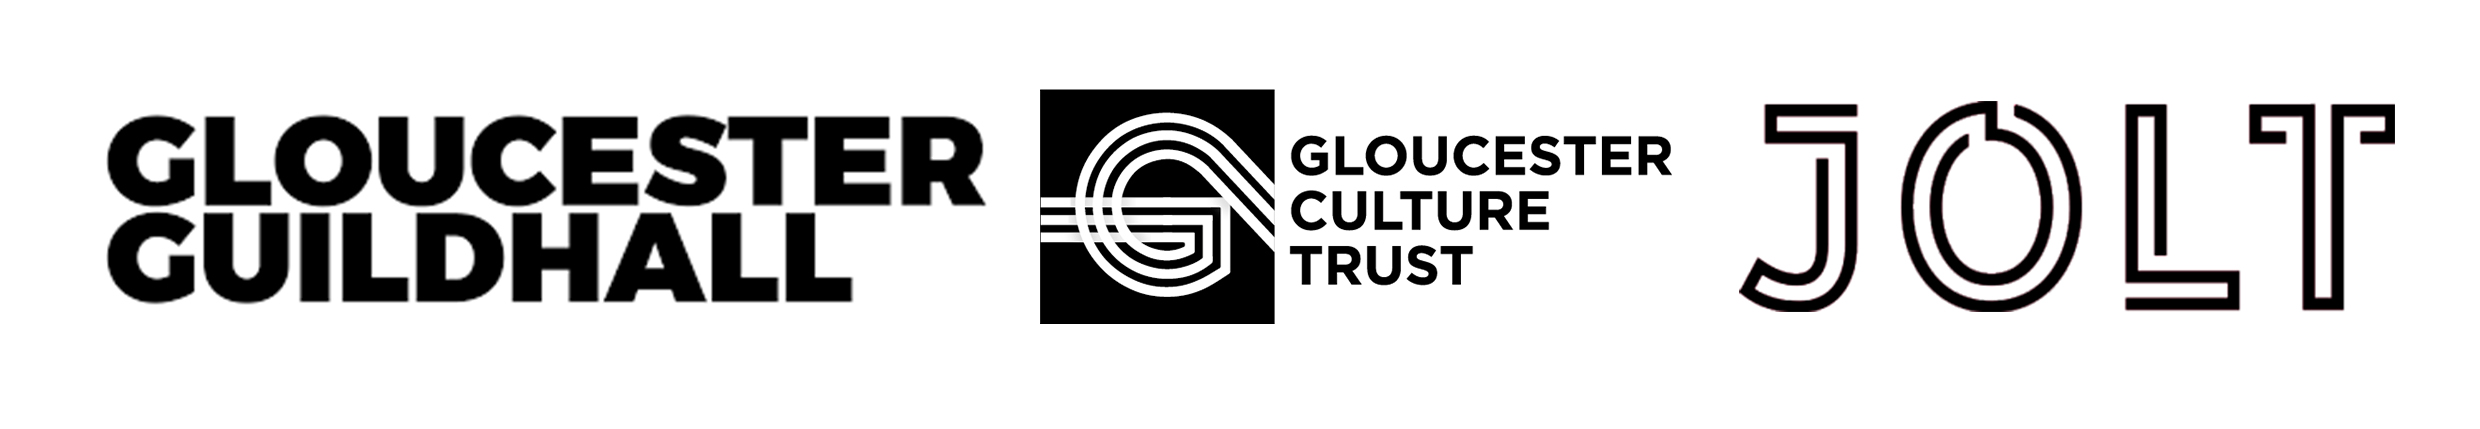 gloucester guildhall, jolt and gloucester culture trust logos